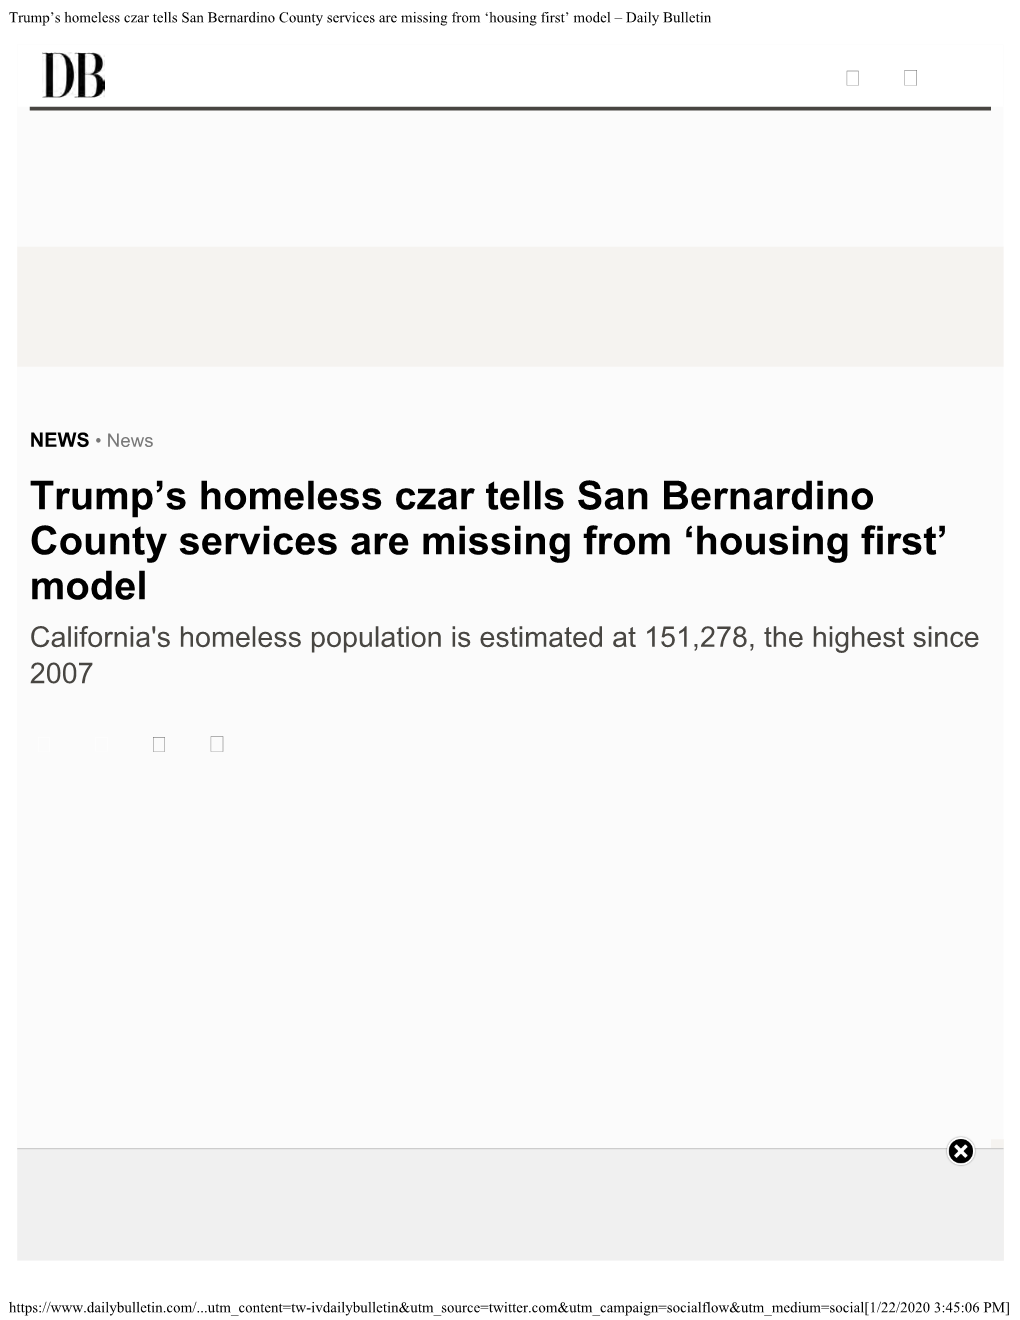 Trump's Homeless Czar Tells San Bernardino County Services Are